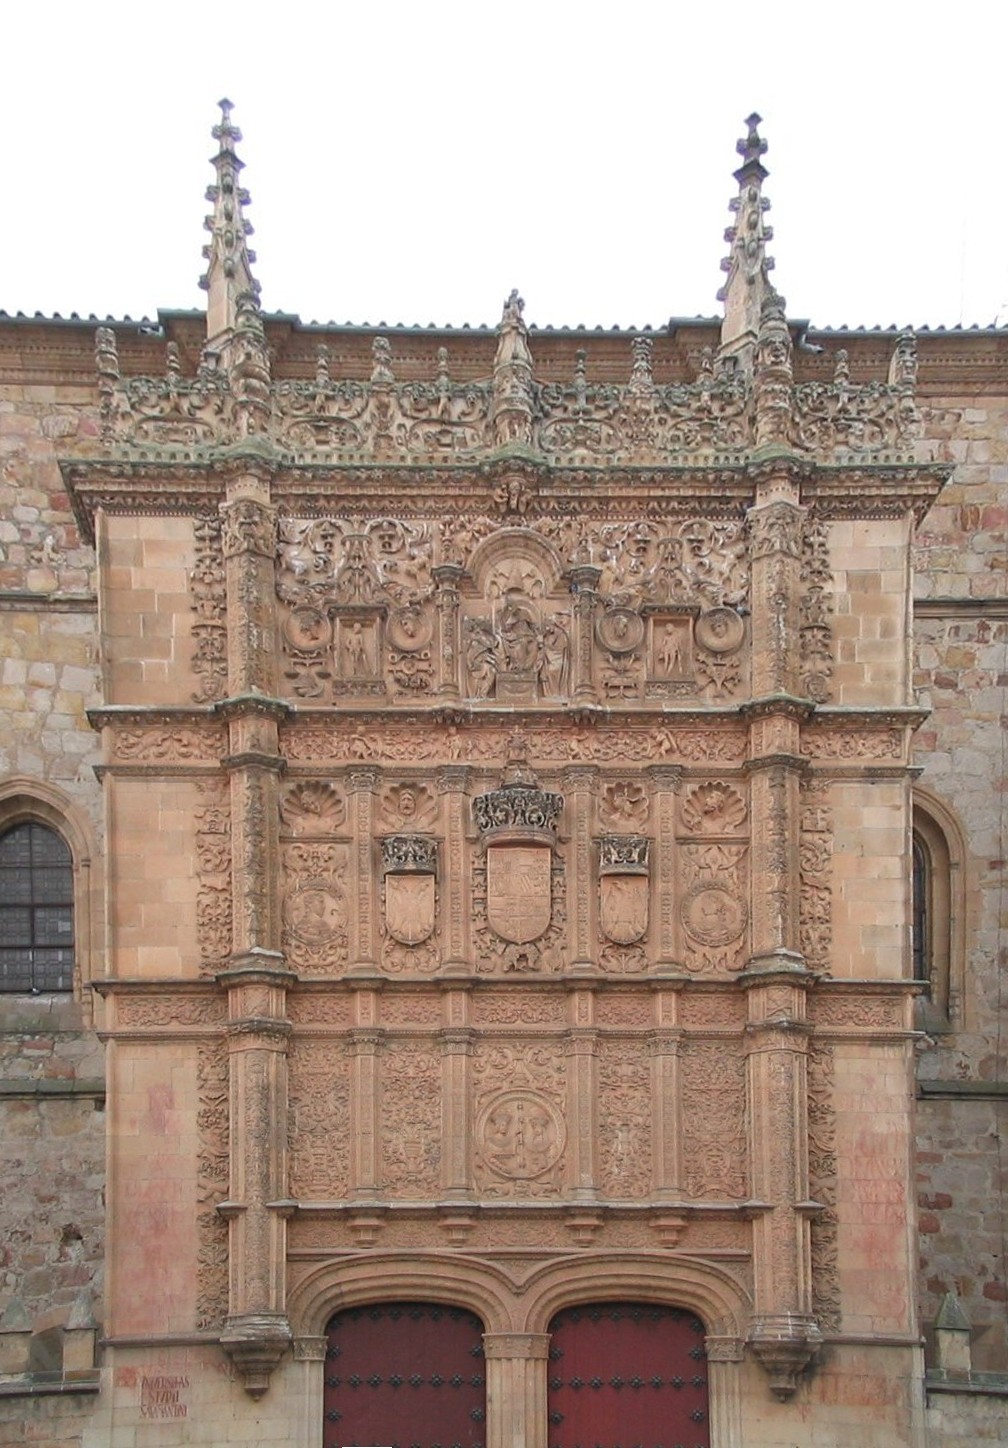 http://upload.wikimedia.org/wikipedia/commons/3/30/University_of_Salamanca.jpg